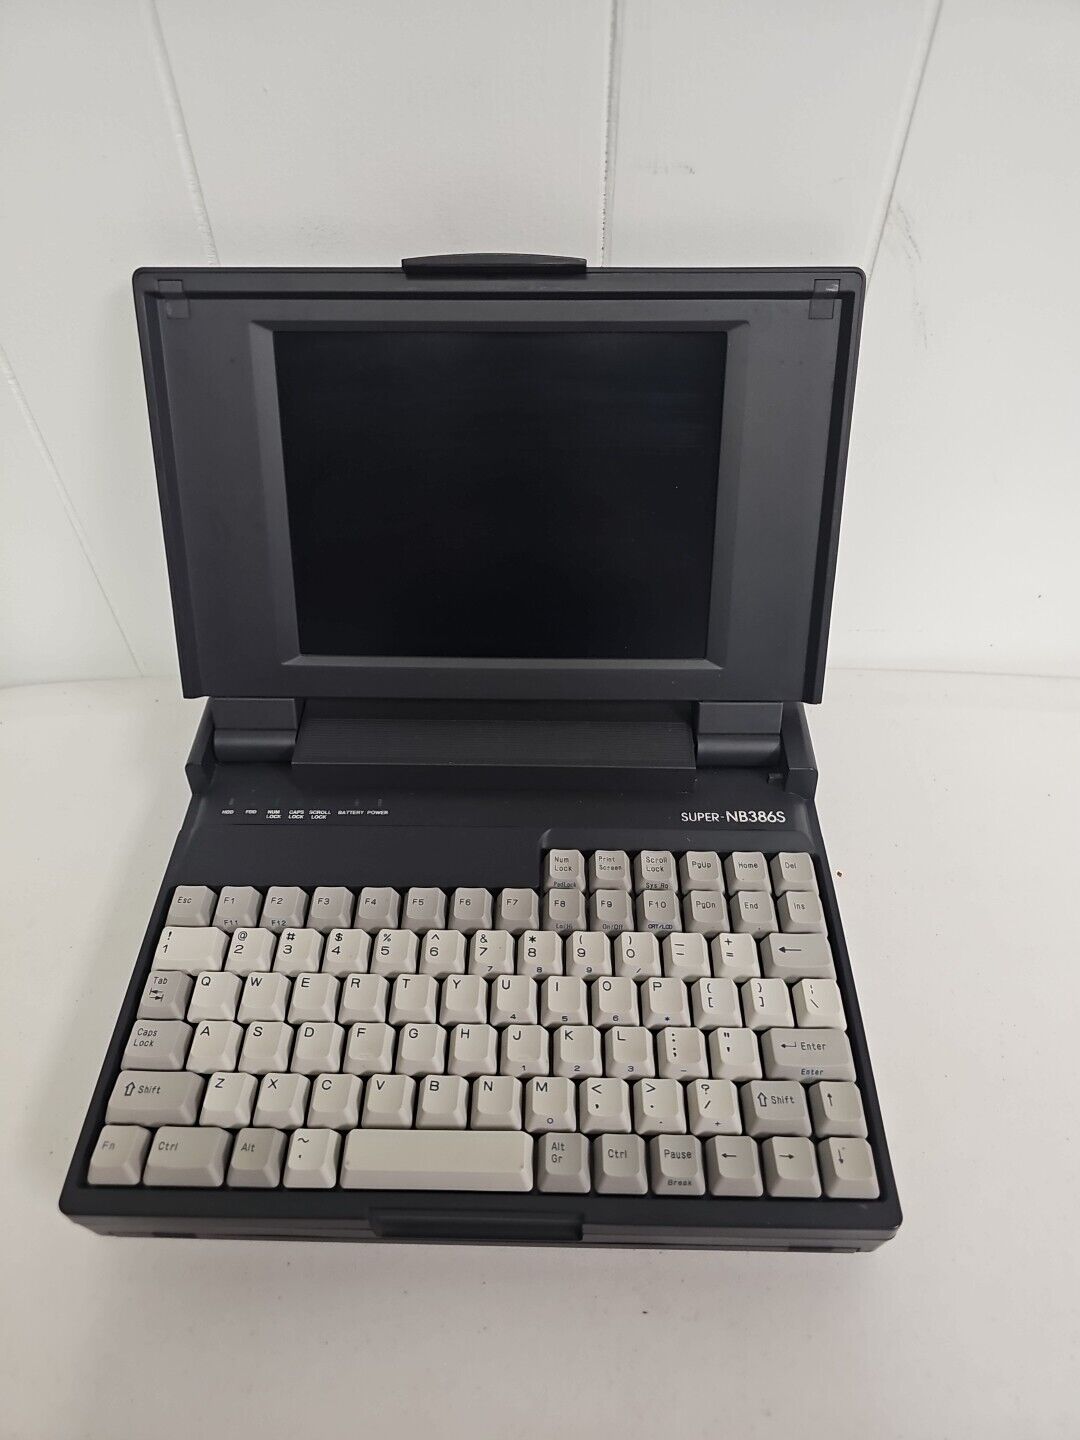 Vintage Hyundai Super-NB386S Laptop Computer UNTESTED